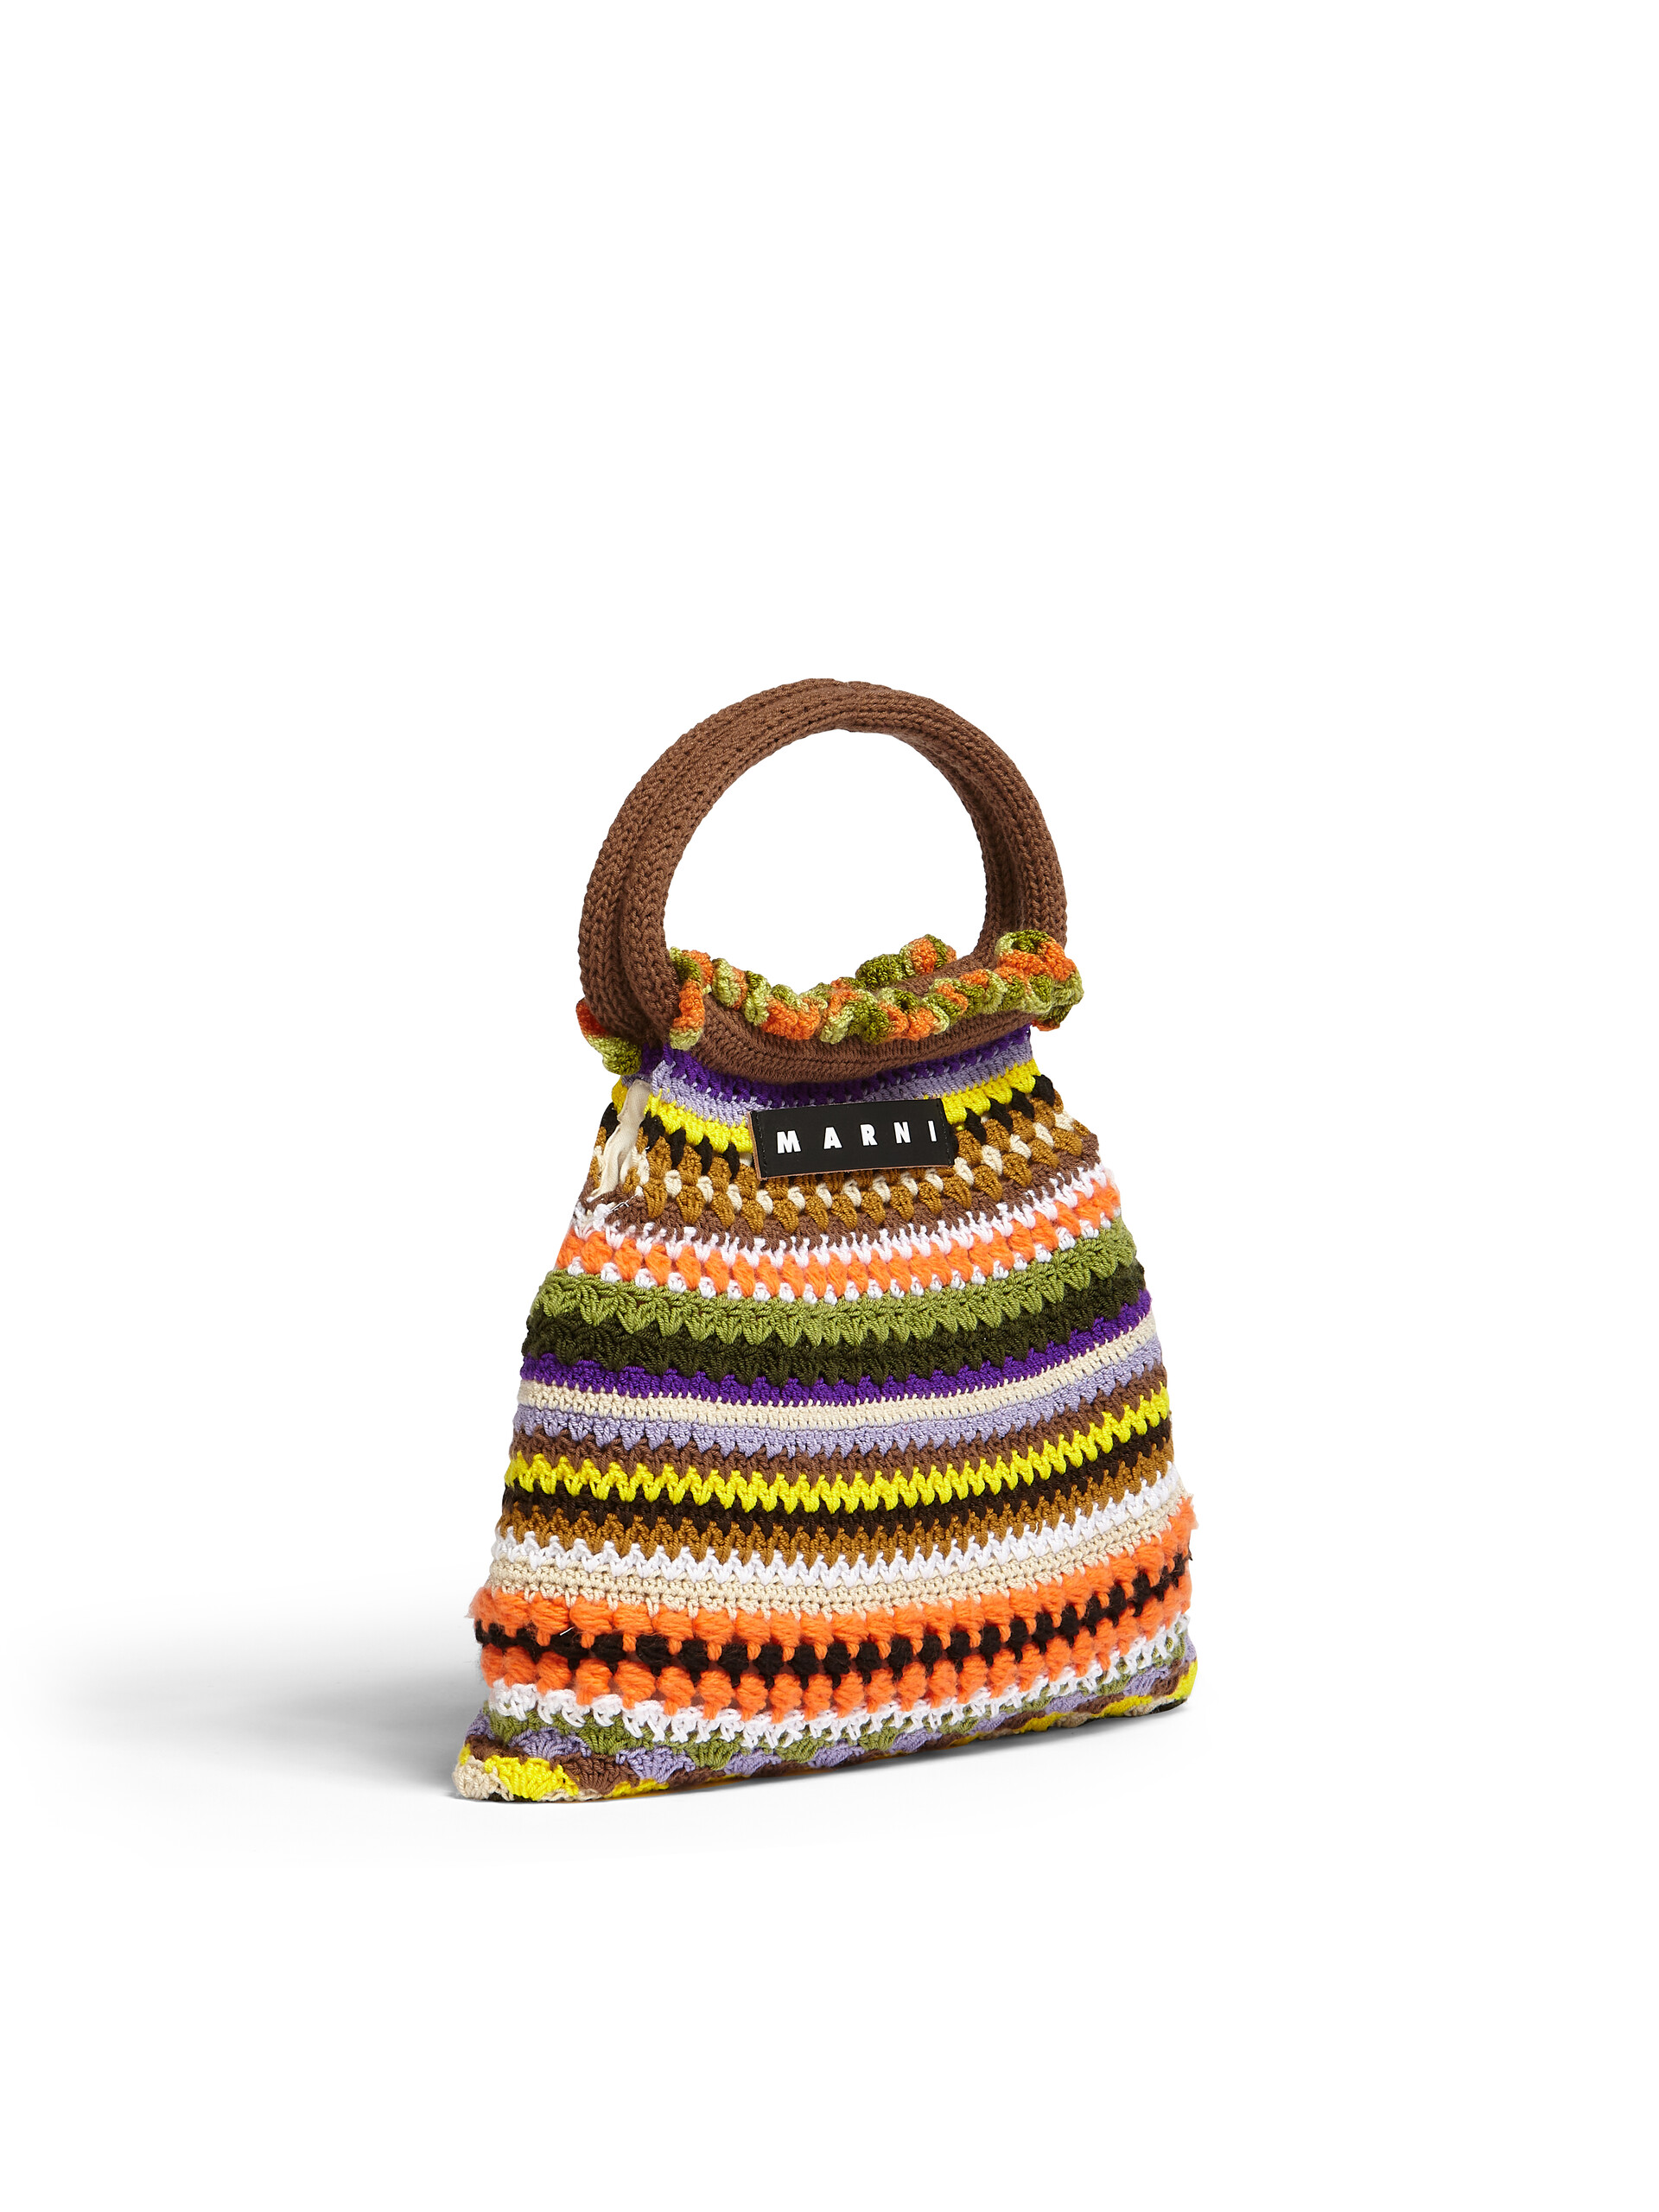 MARNI MARKET bag in brown crochet - Furniture - Image 2